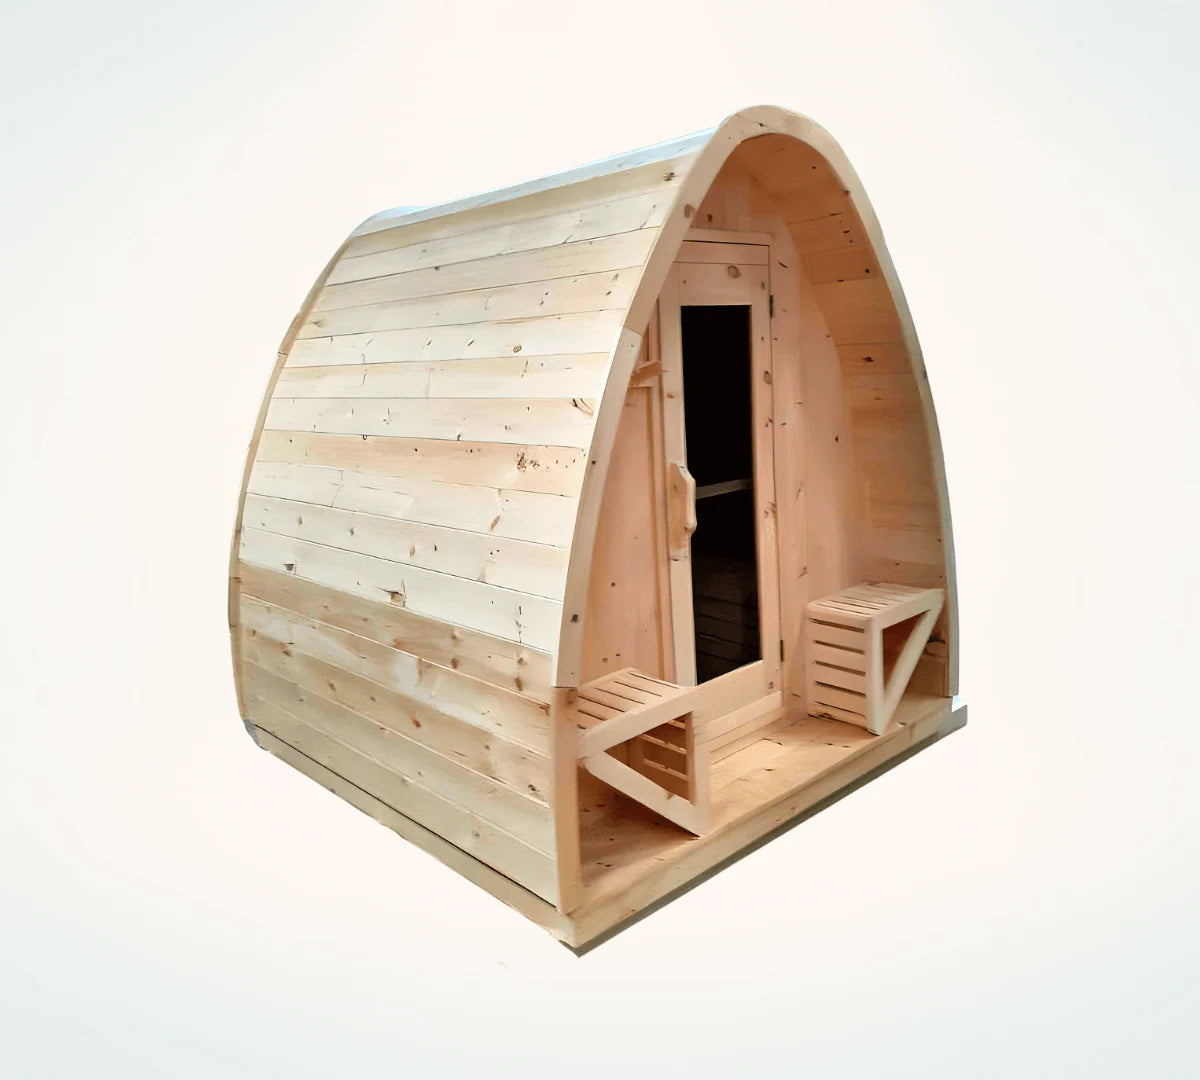 True North Tiny Pod Outdoor Sauna – Red Cedar, White Cedar, Pine Wood